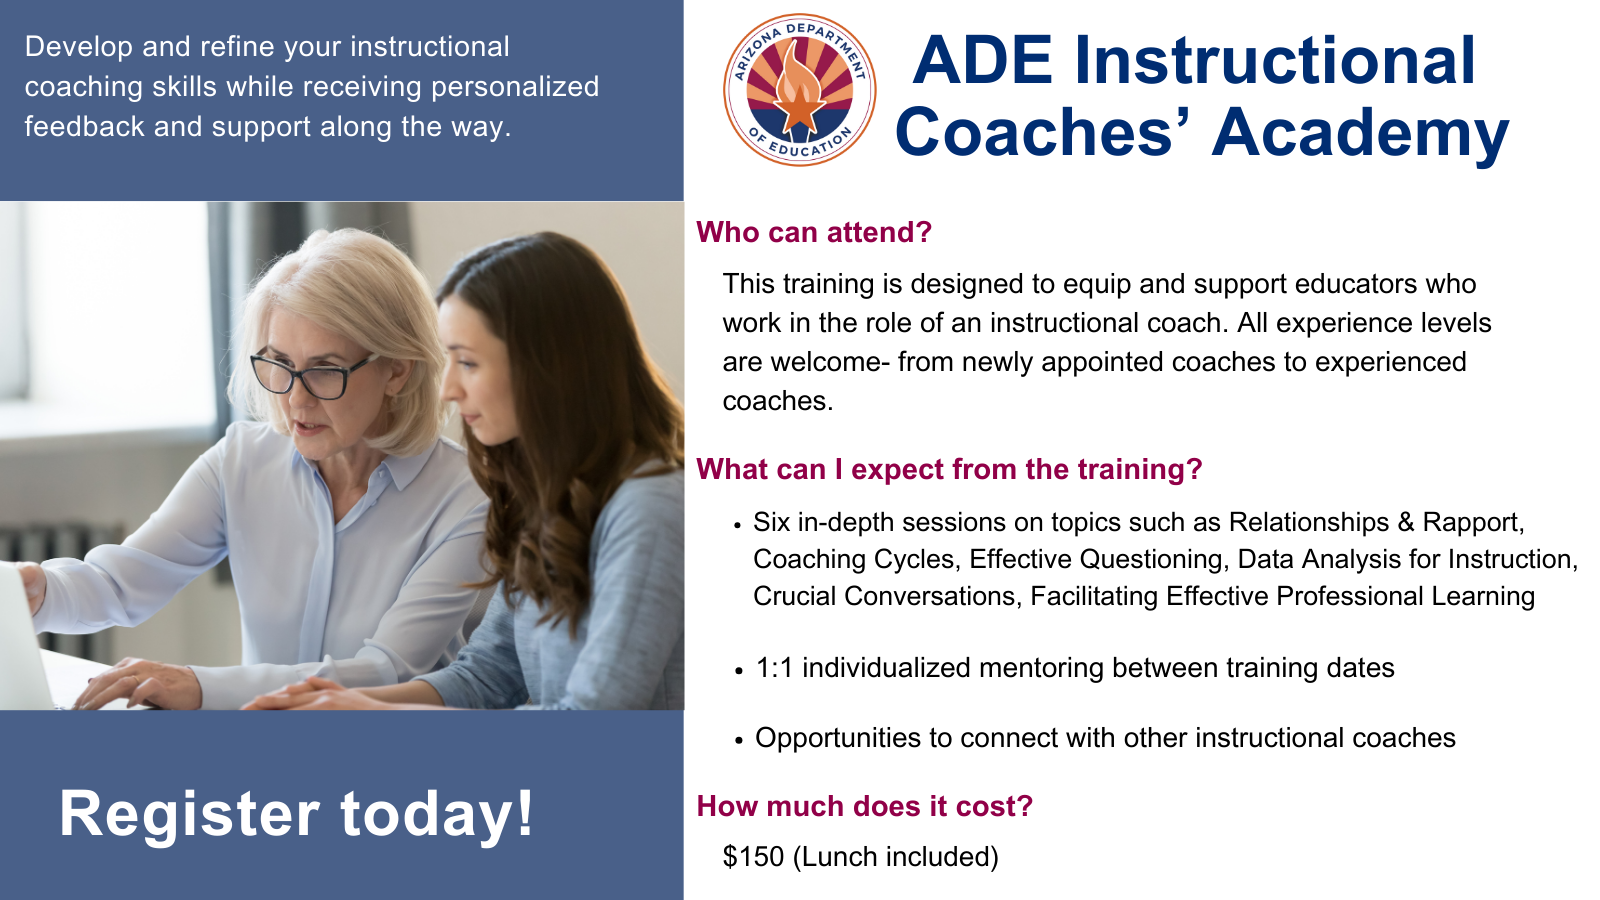 ADE Instructional Coaches' Academy